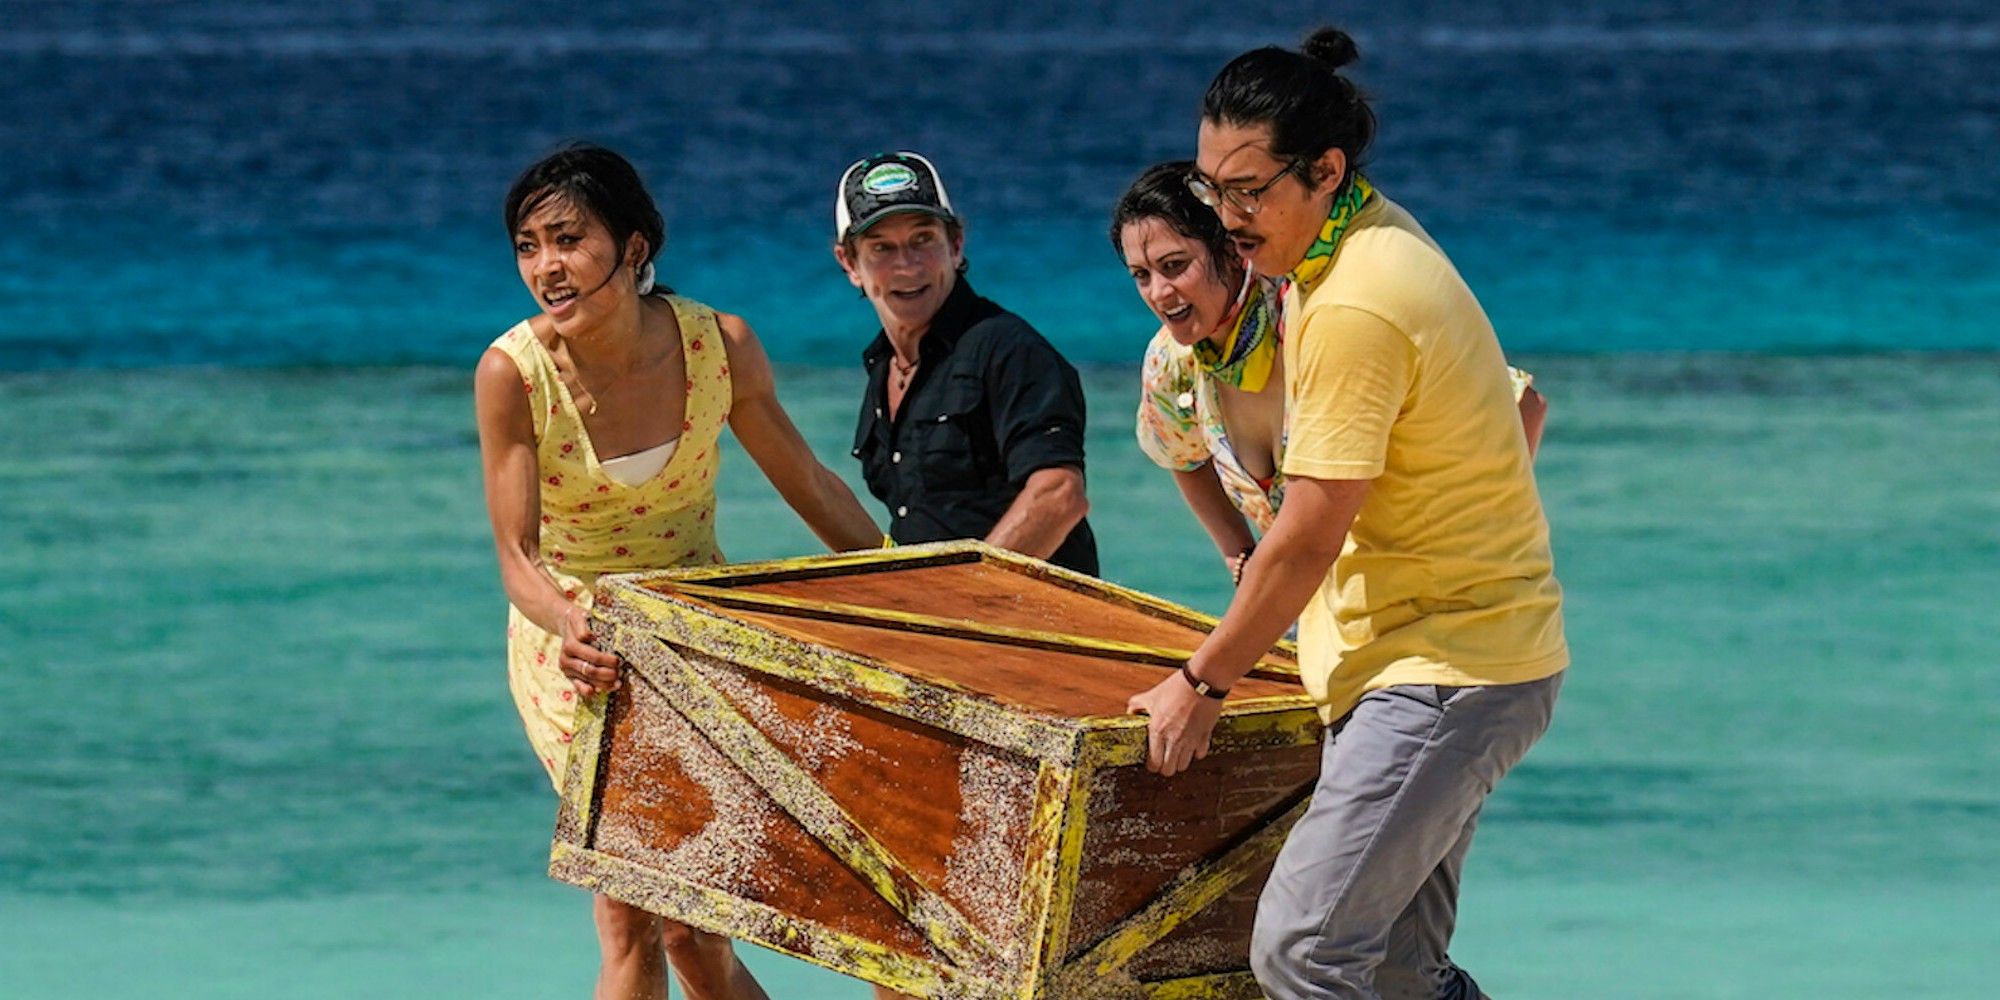 Survivor 43 cast shot in ocean with jeff probst and crate